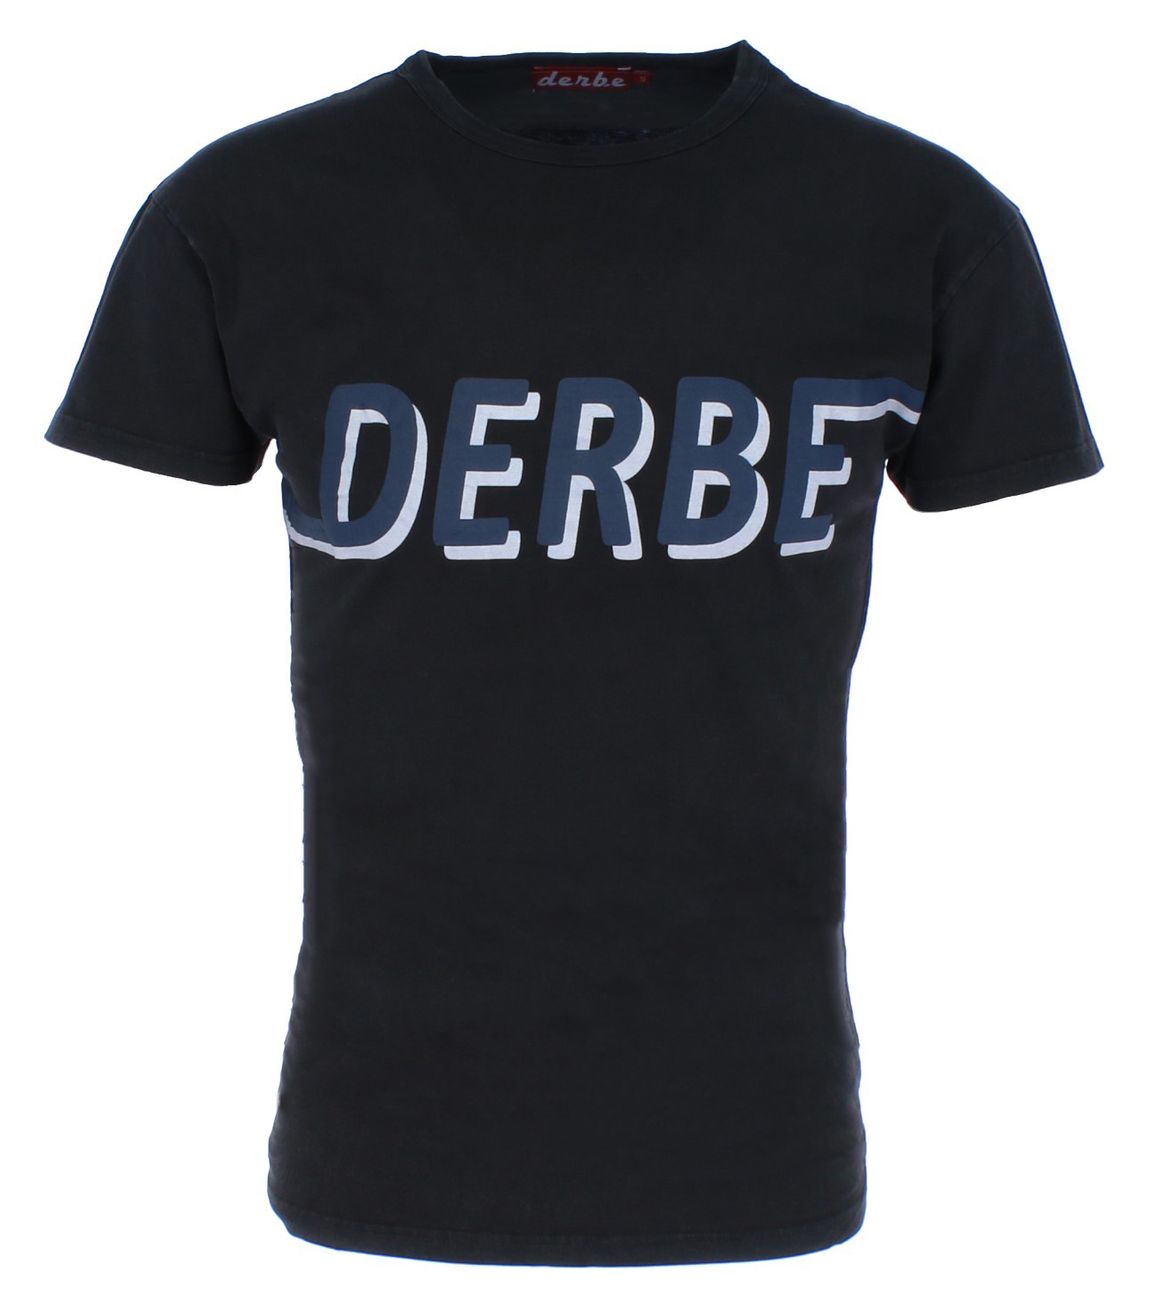 Derbe Hamburg D to E Boys Herren T-Shirt - Derbe Hamburg - SAGATOO - 4251634708275